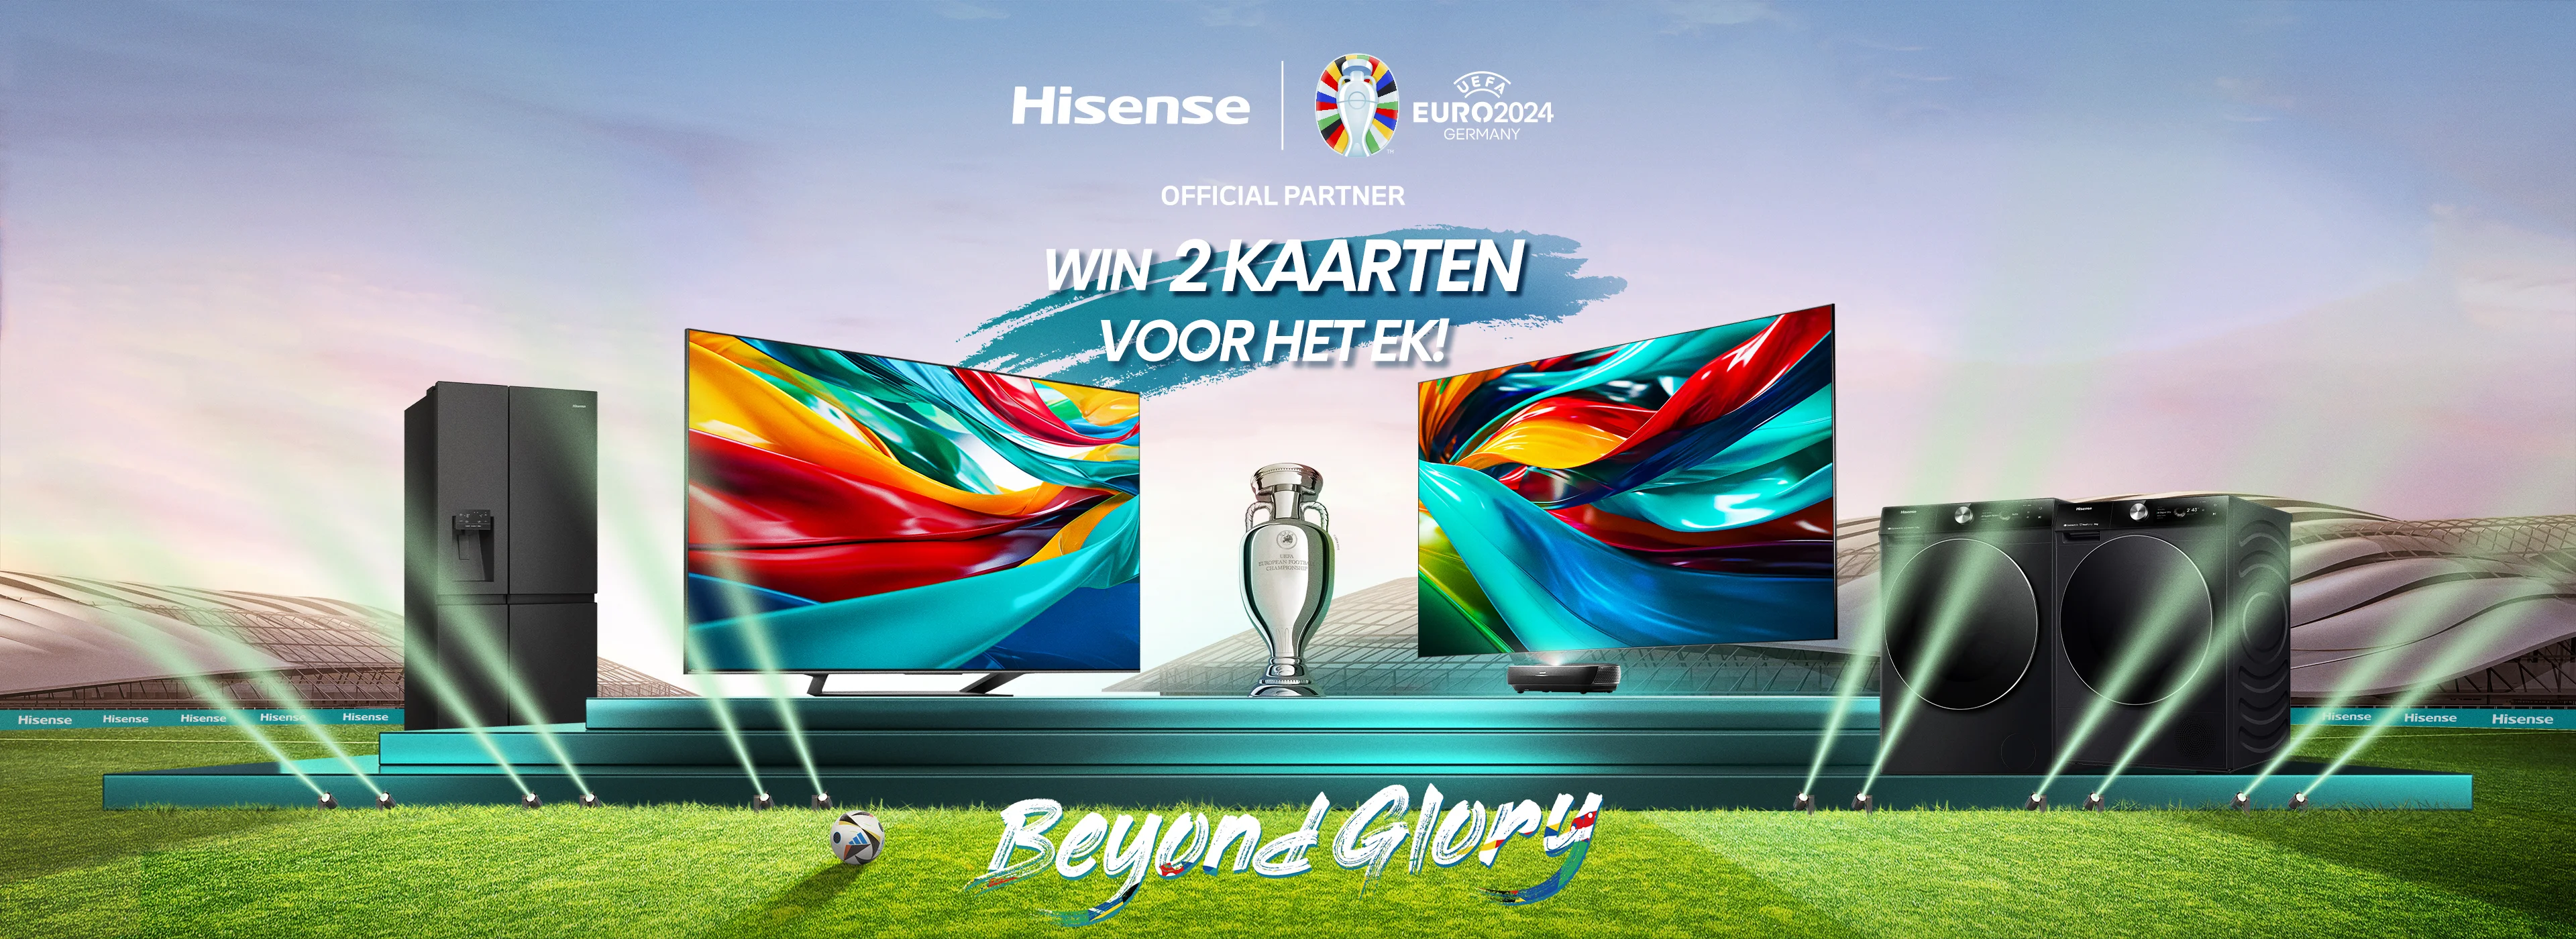 Hisense NL EK ticket winactie banner.webp